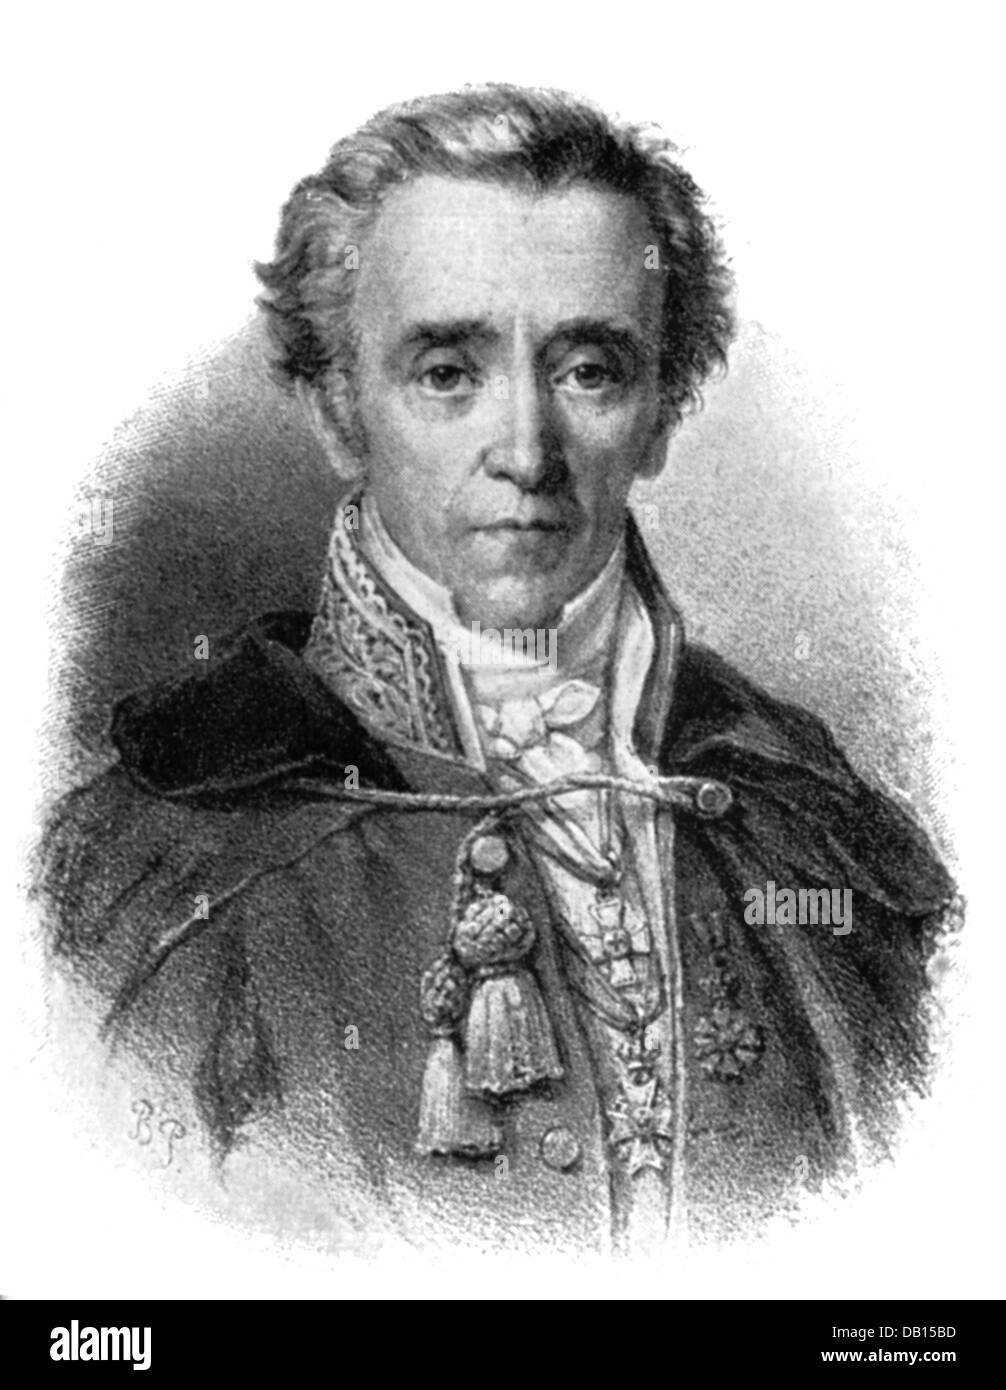 Cotta, Johann Friedrich, 27.4.1764 - 29.12.1832, German publisher, portrait, lithograph, circa 1830, Stock Photo